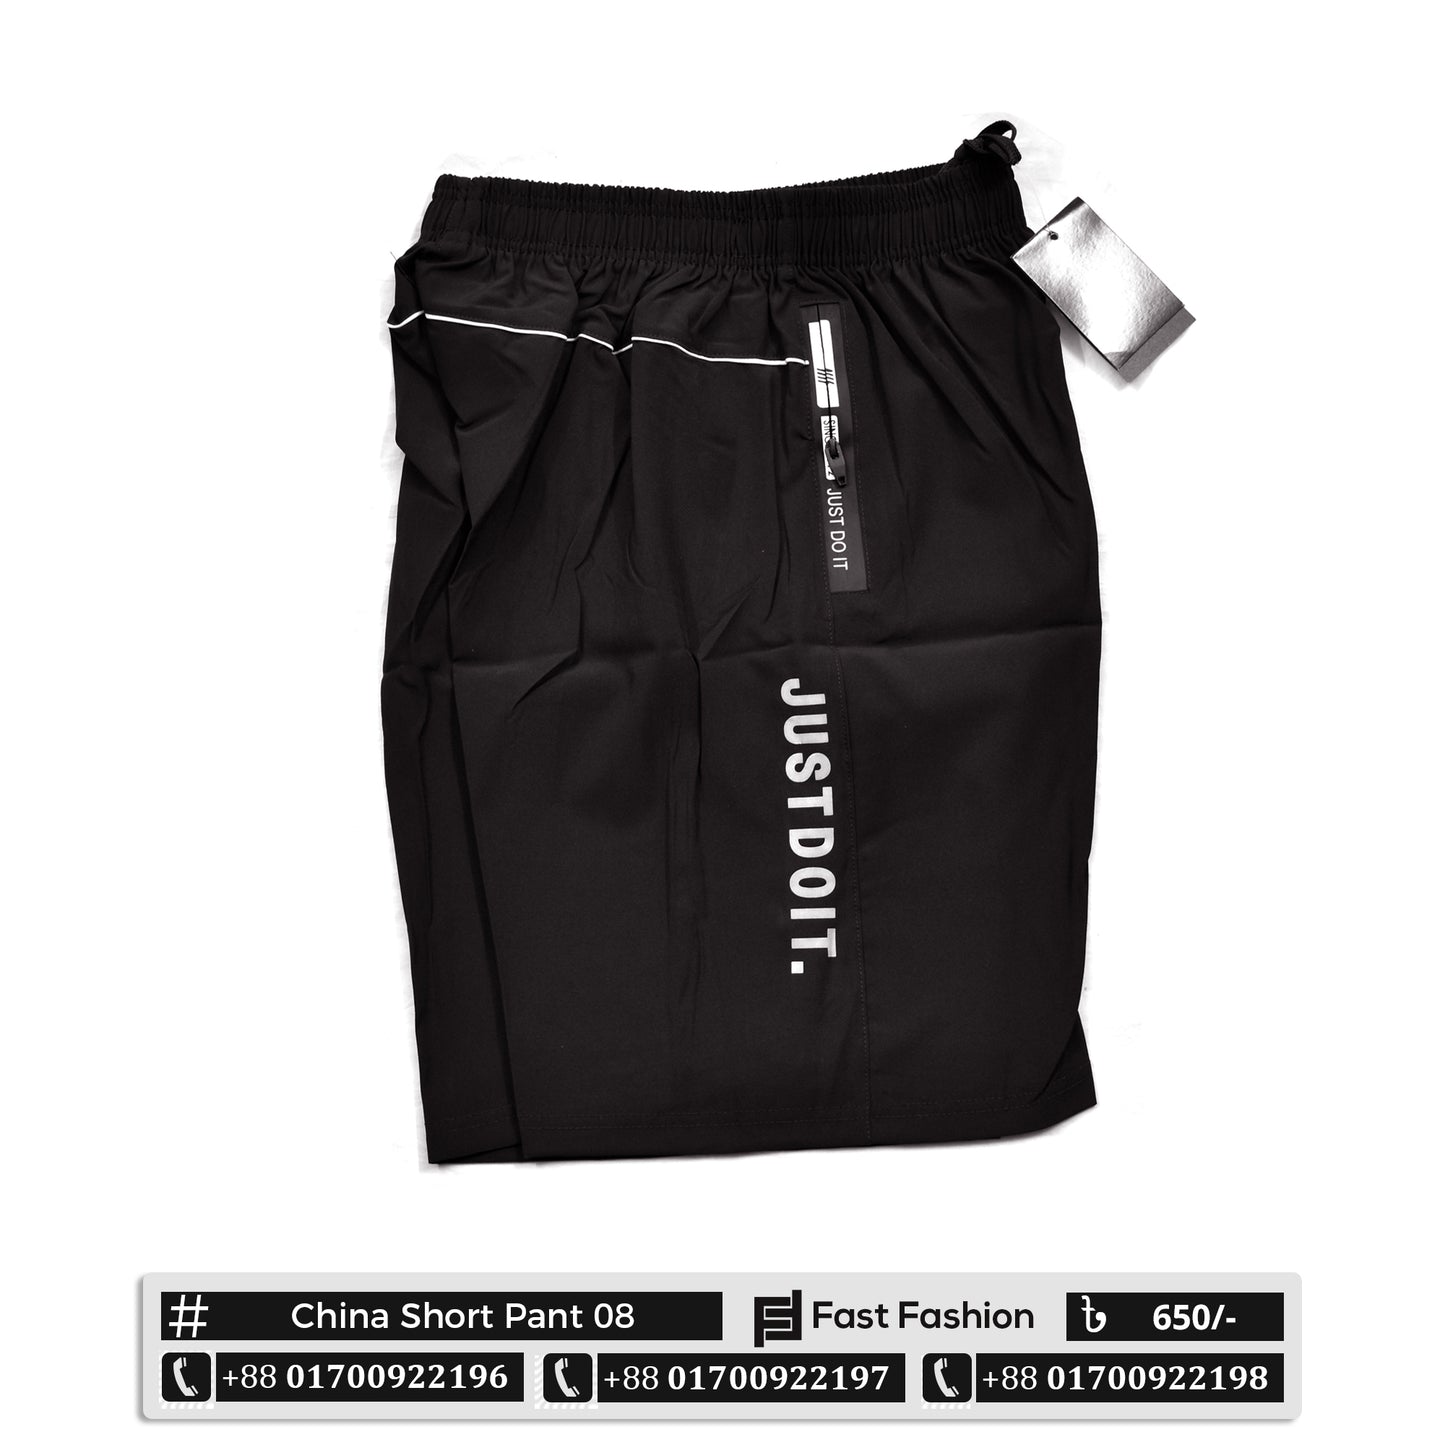 China Short Pant | Premium Quality Short Pant | China Short Pant 08